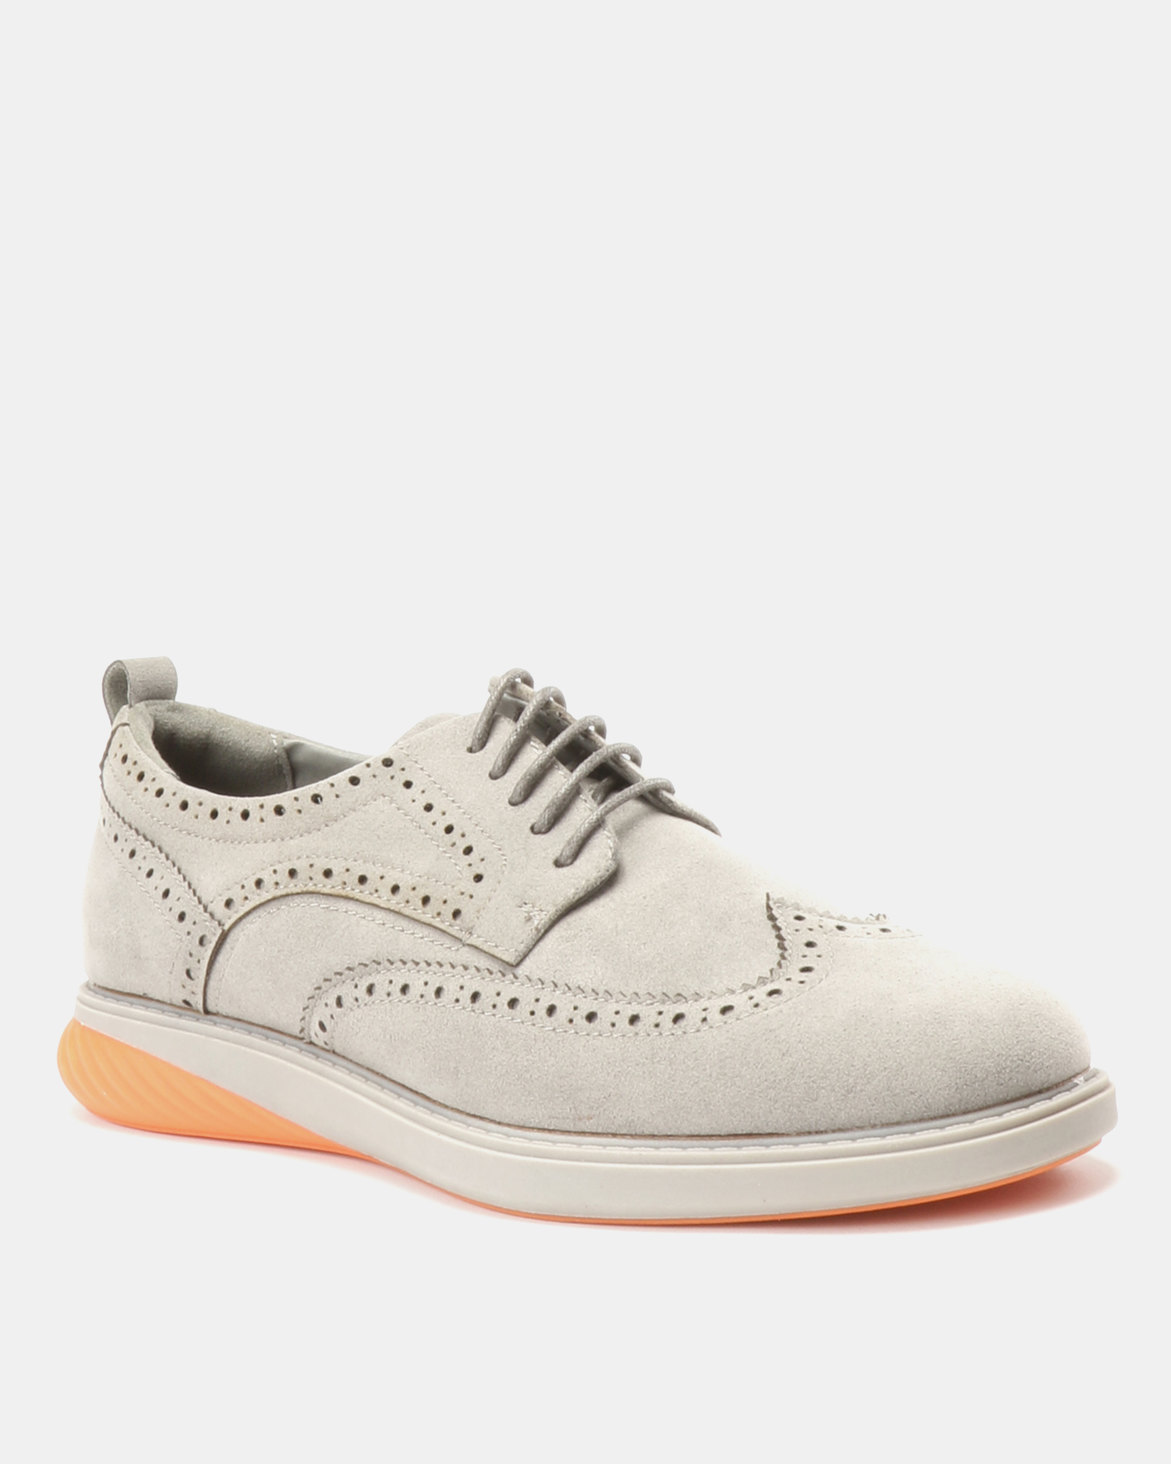 Paul of London Casual Brogue Lace Up Shoes Grey | Zando